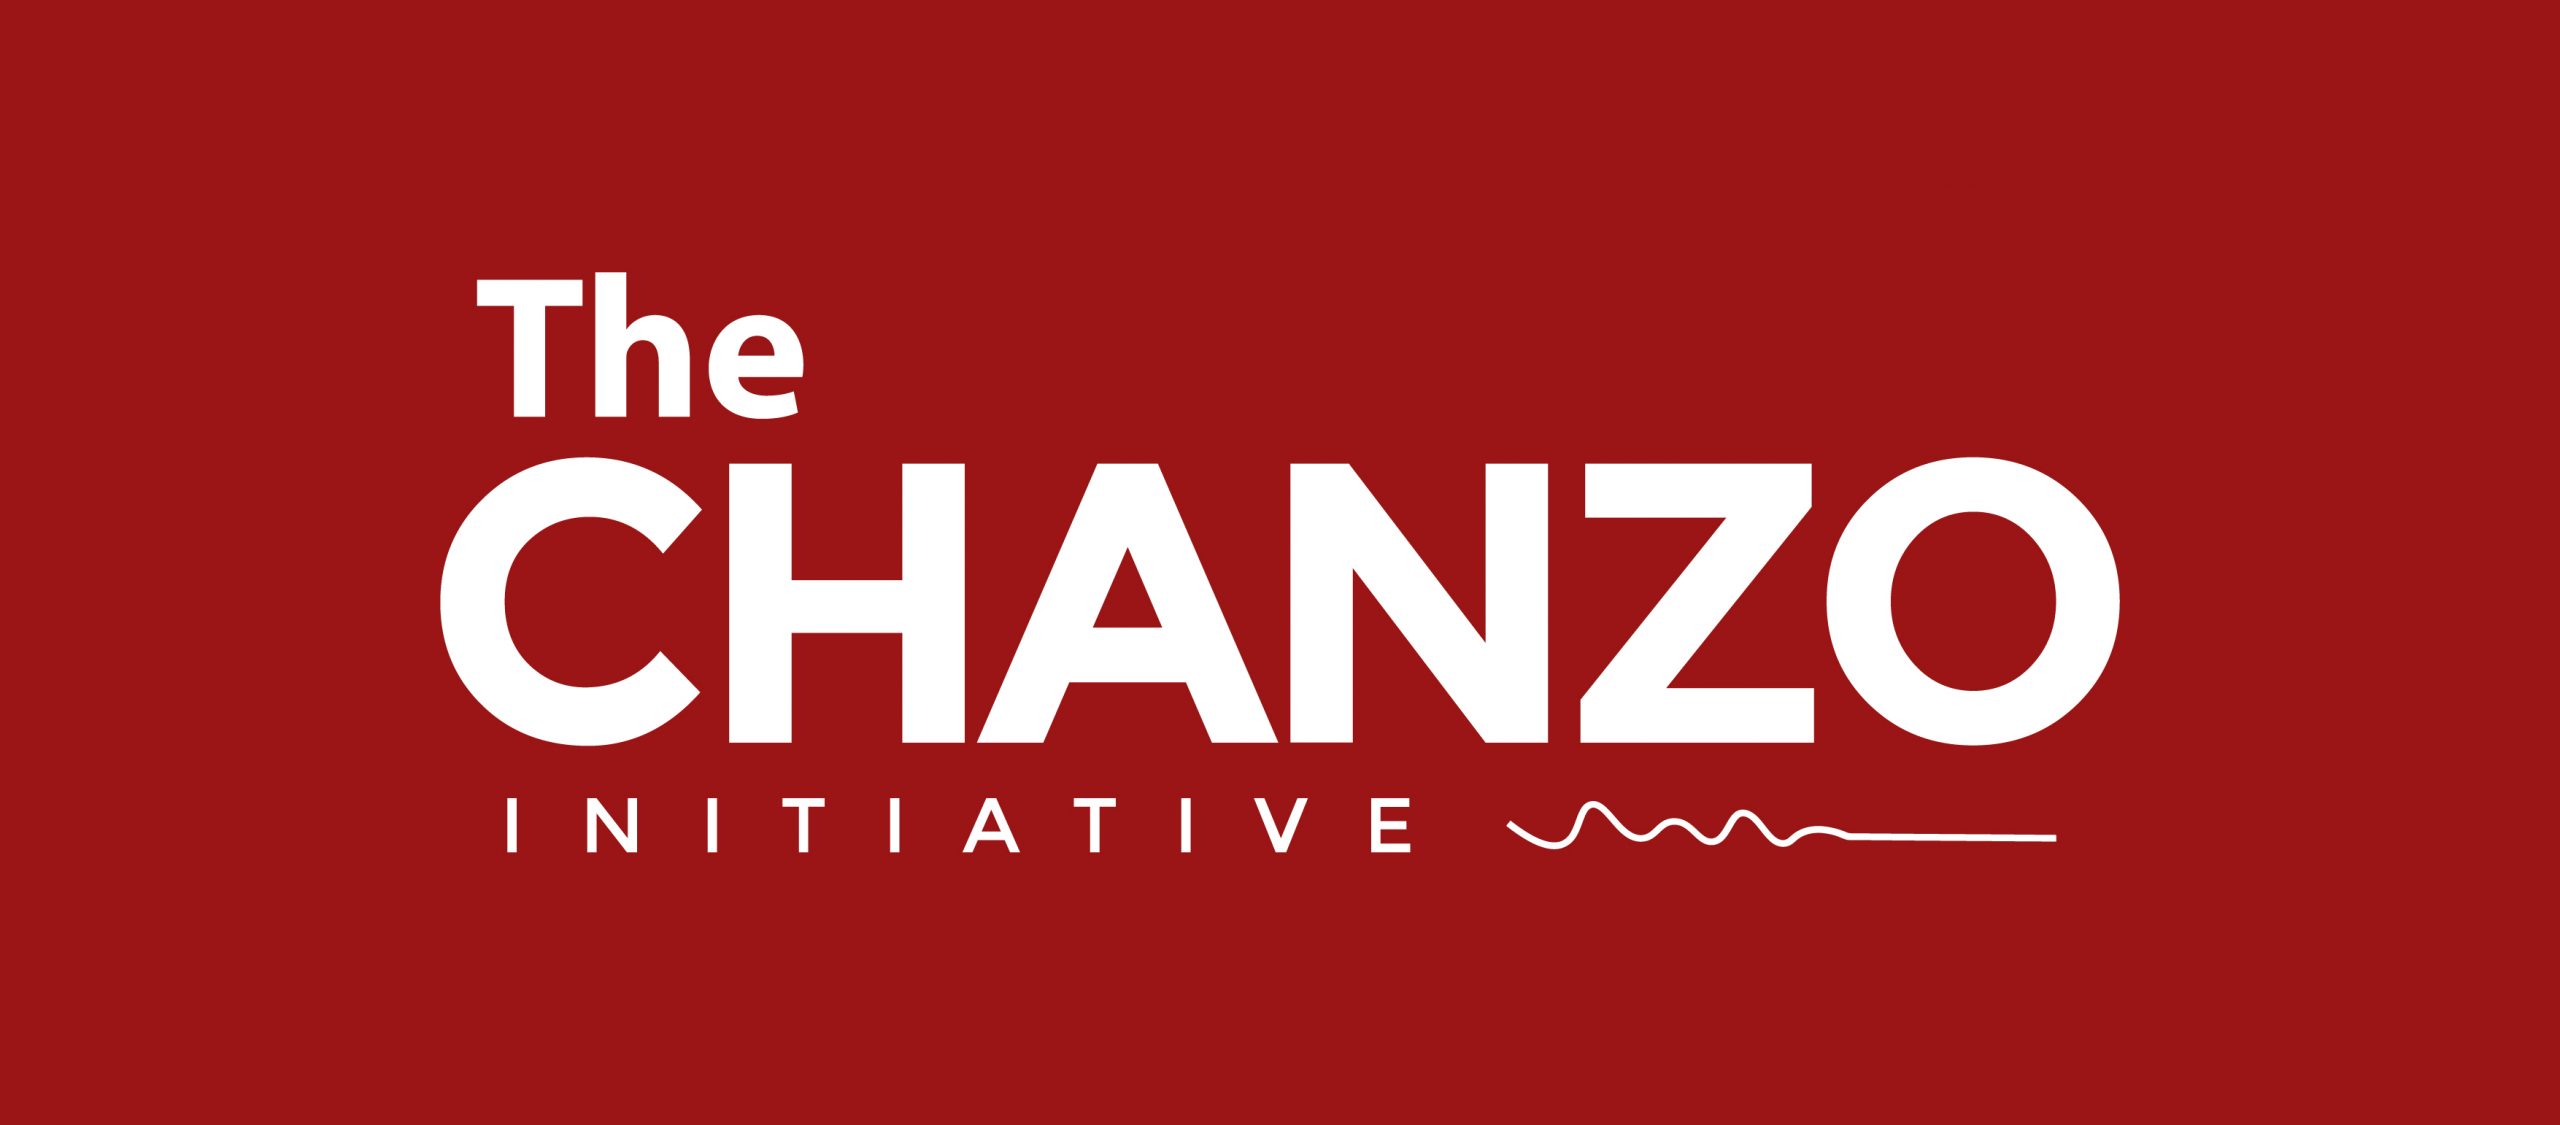 The Chanzo Initiative